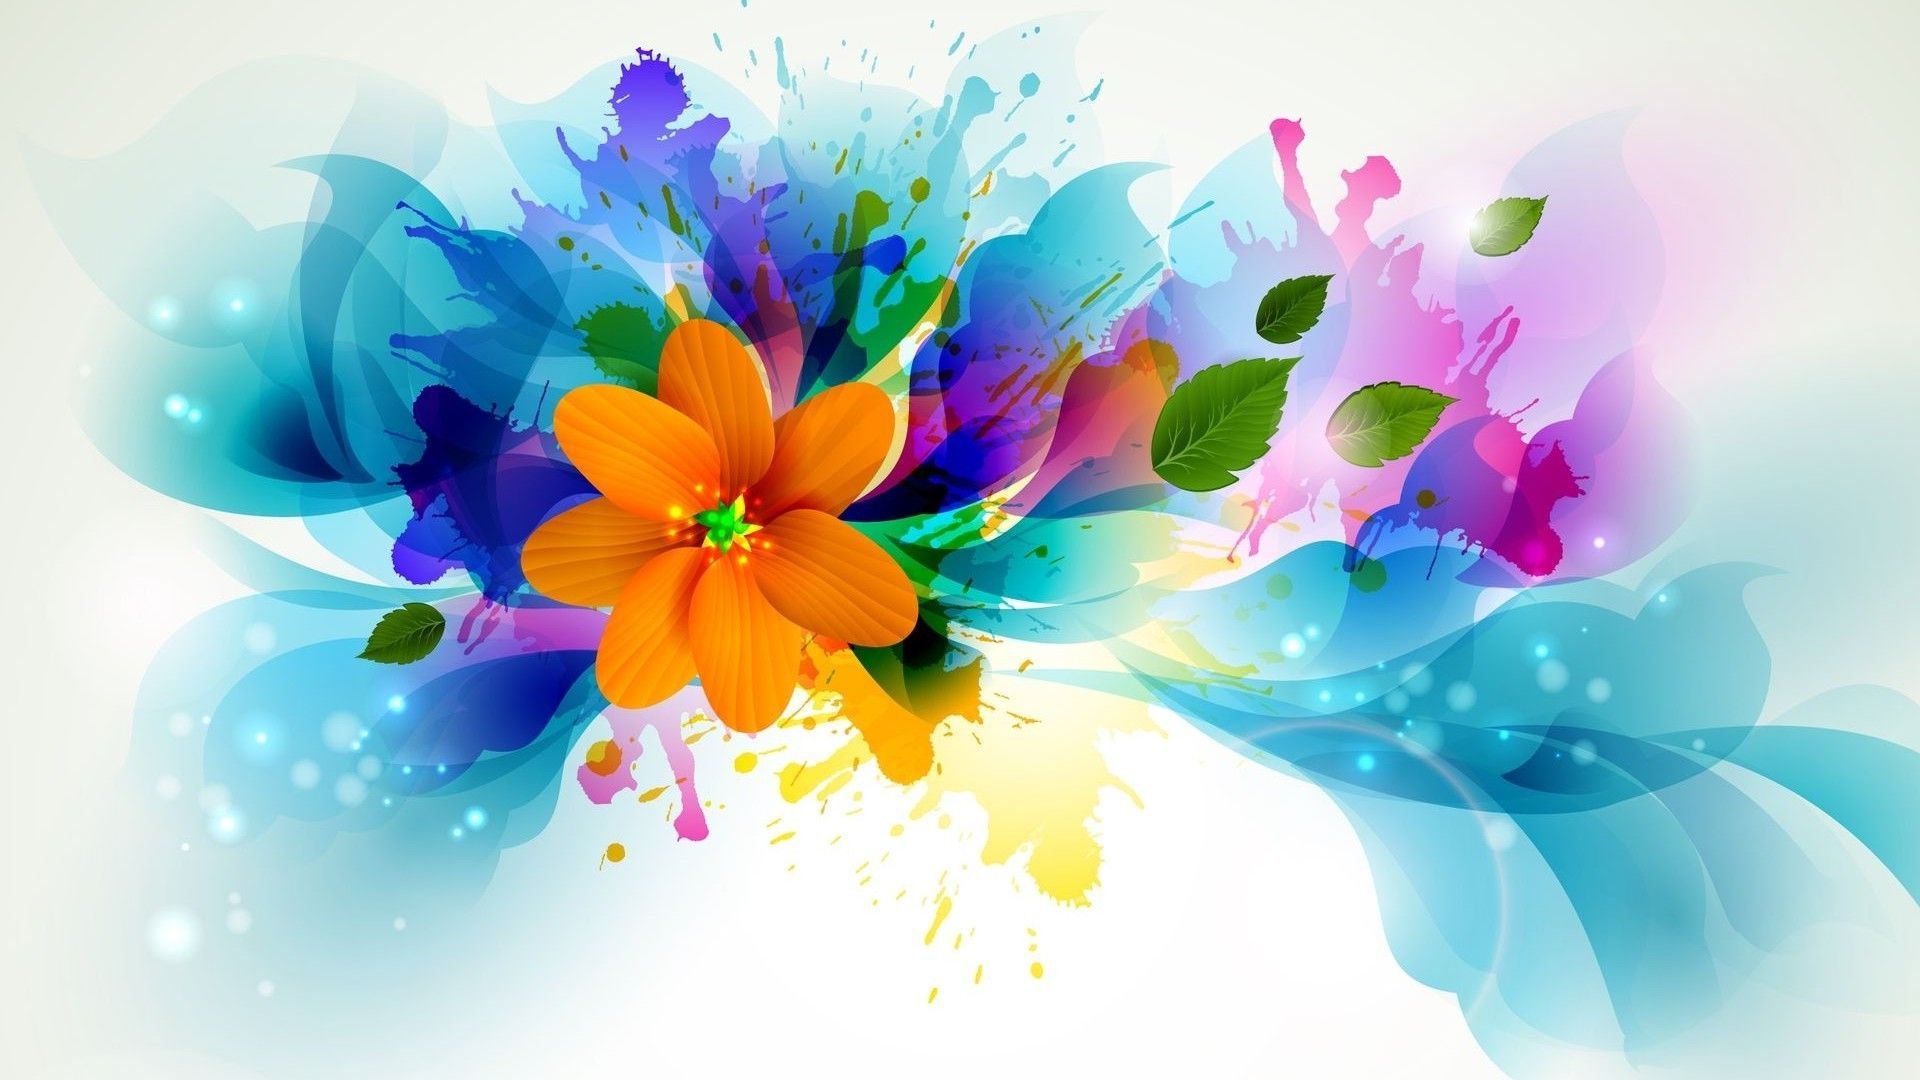 Animated Flower Wallpaper HD. Best HD Wallpaper. Flower wallpaper, Flower artwork, Ocean mural